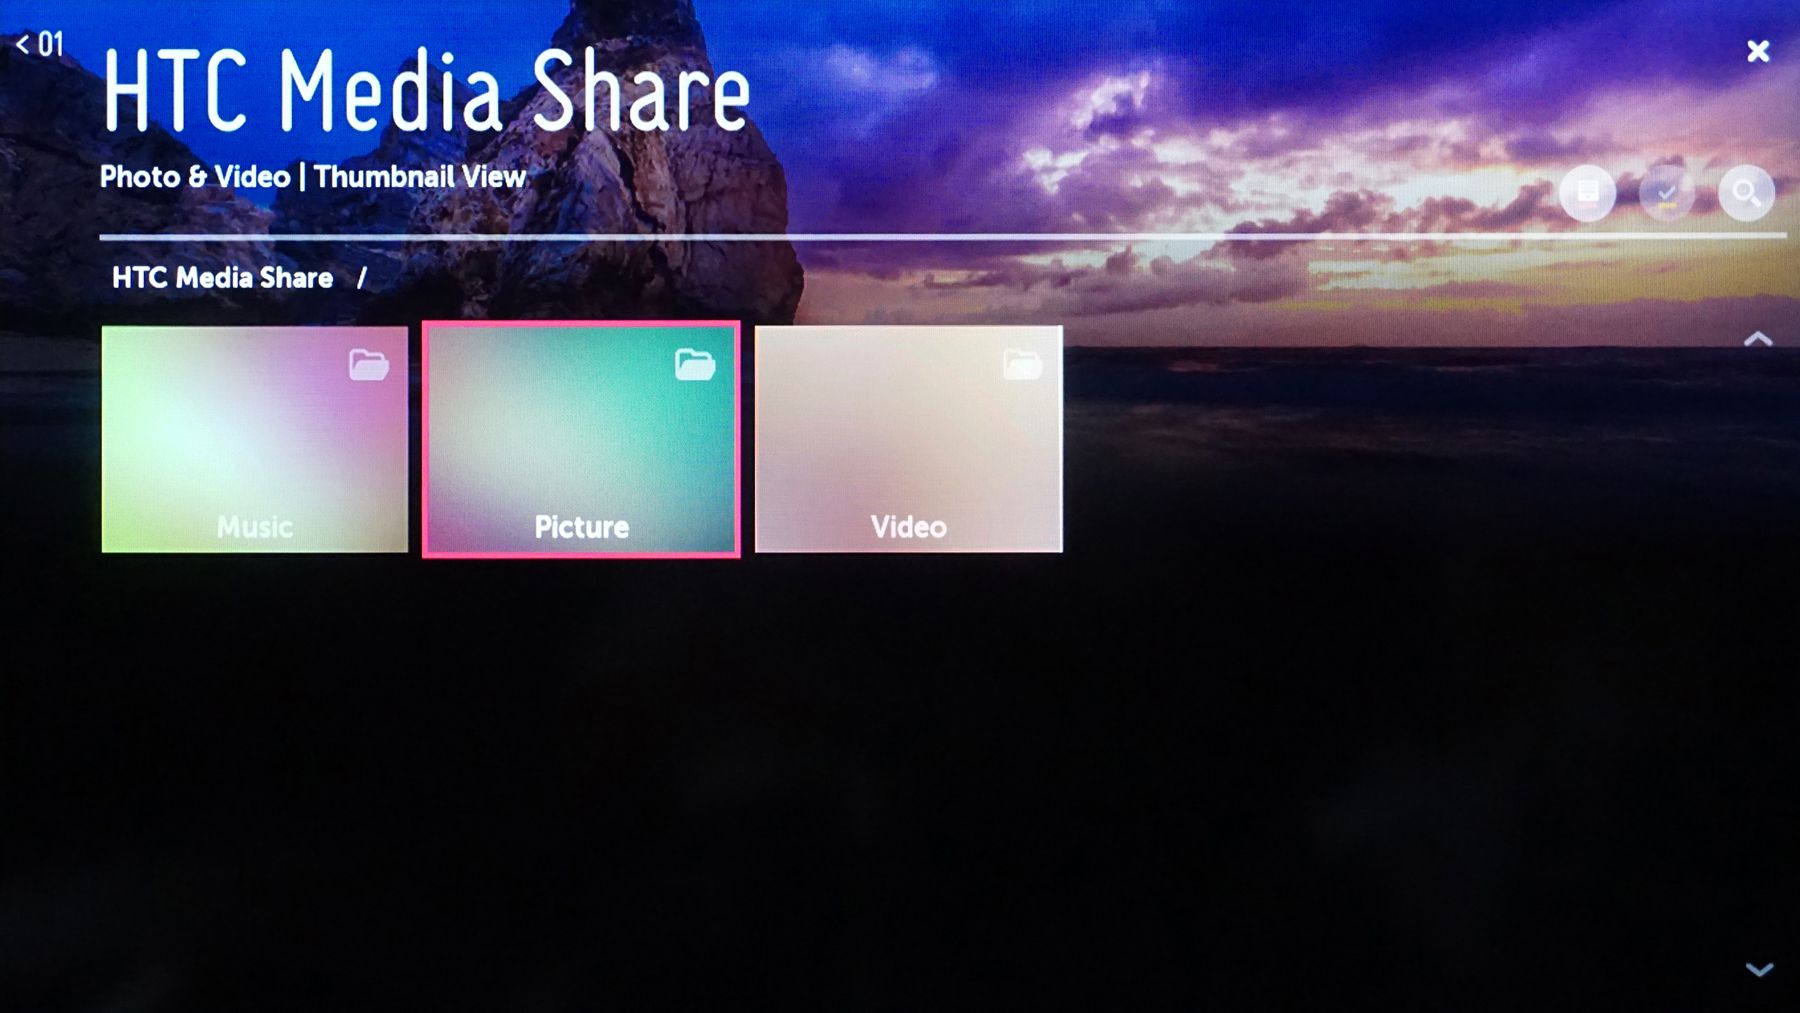 LG Smart TV Content Share - HTC Media Share